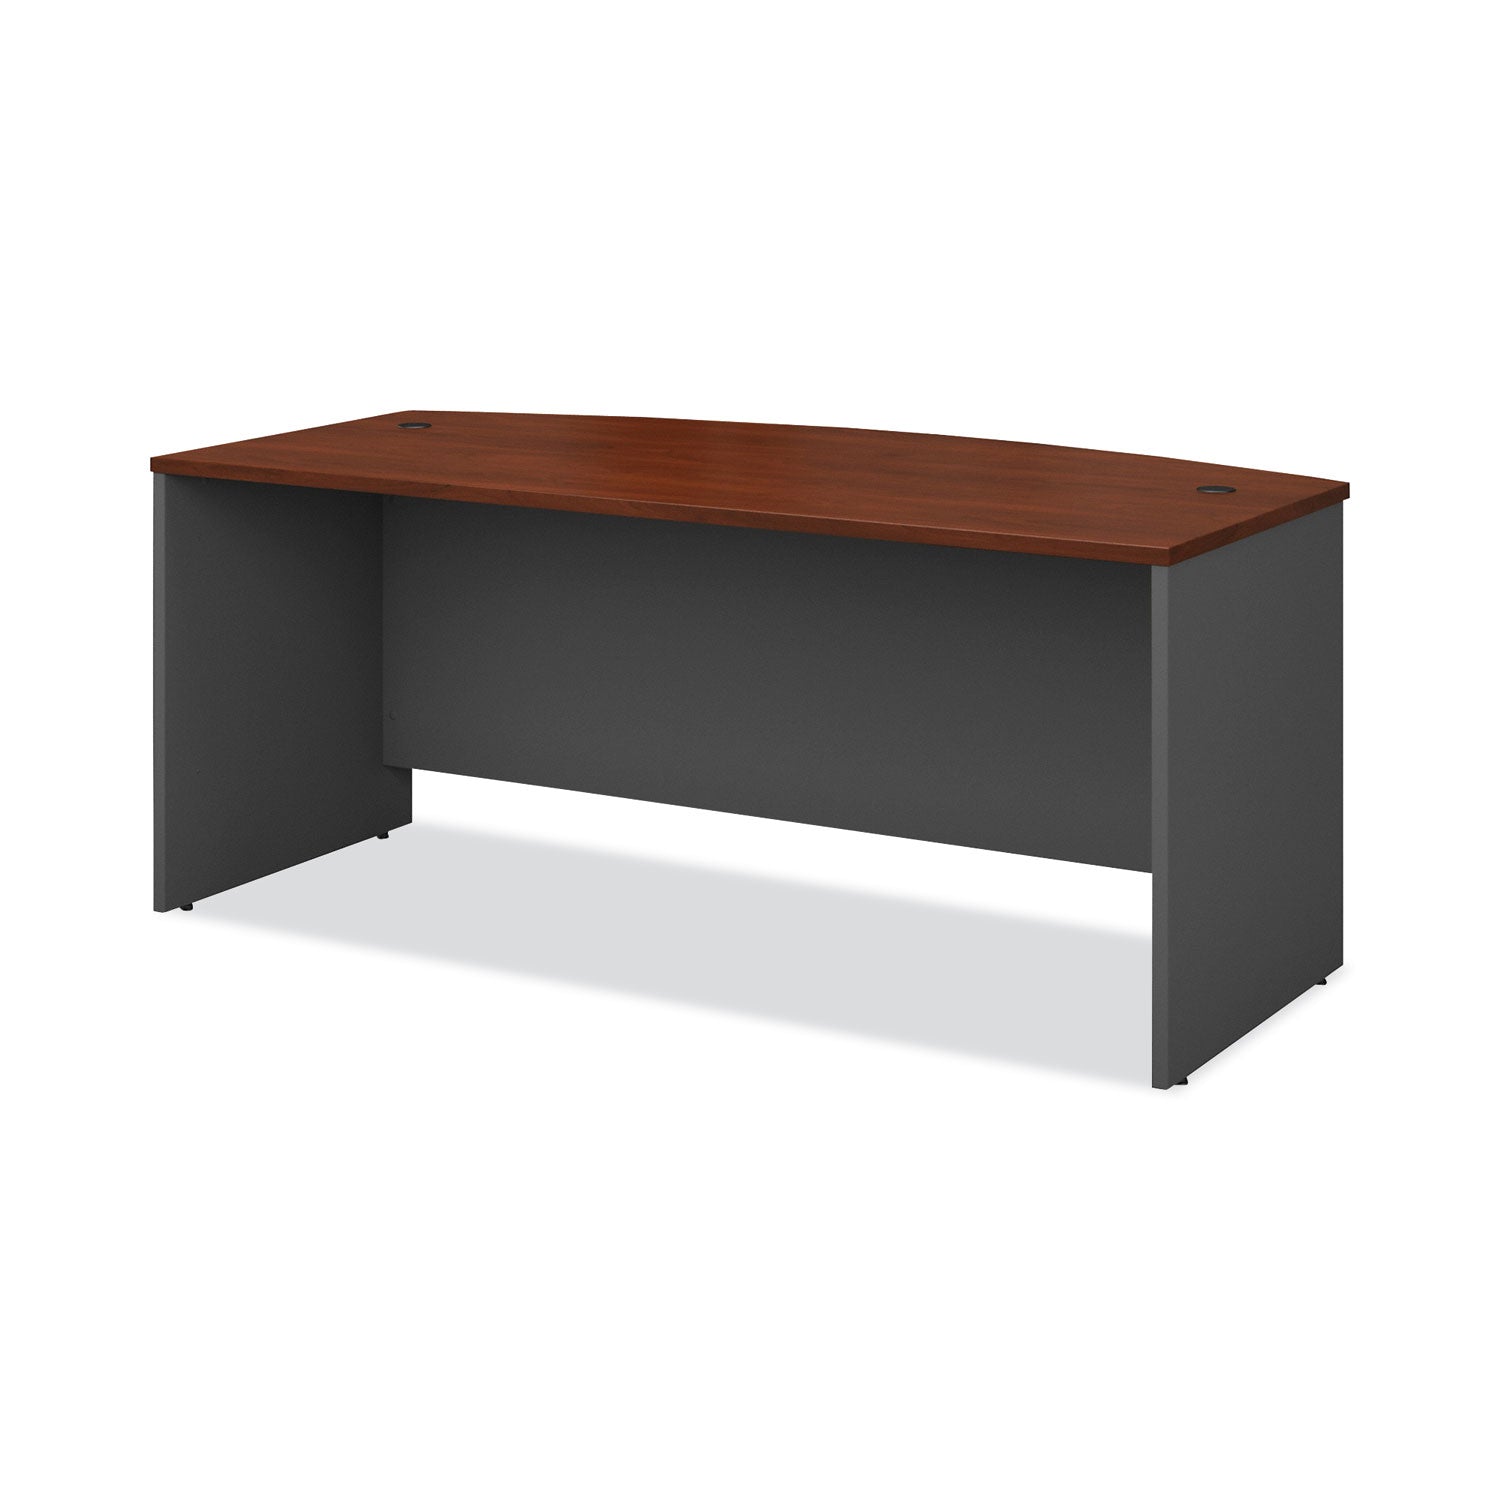 Series C Collection Bow Front Desk, 71.13" x 36.13" x 29.88", Hansen Cherry/Graphite Gray - 